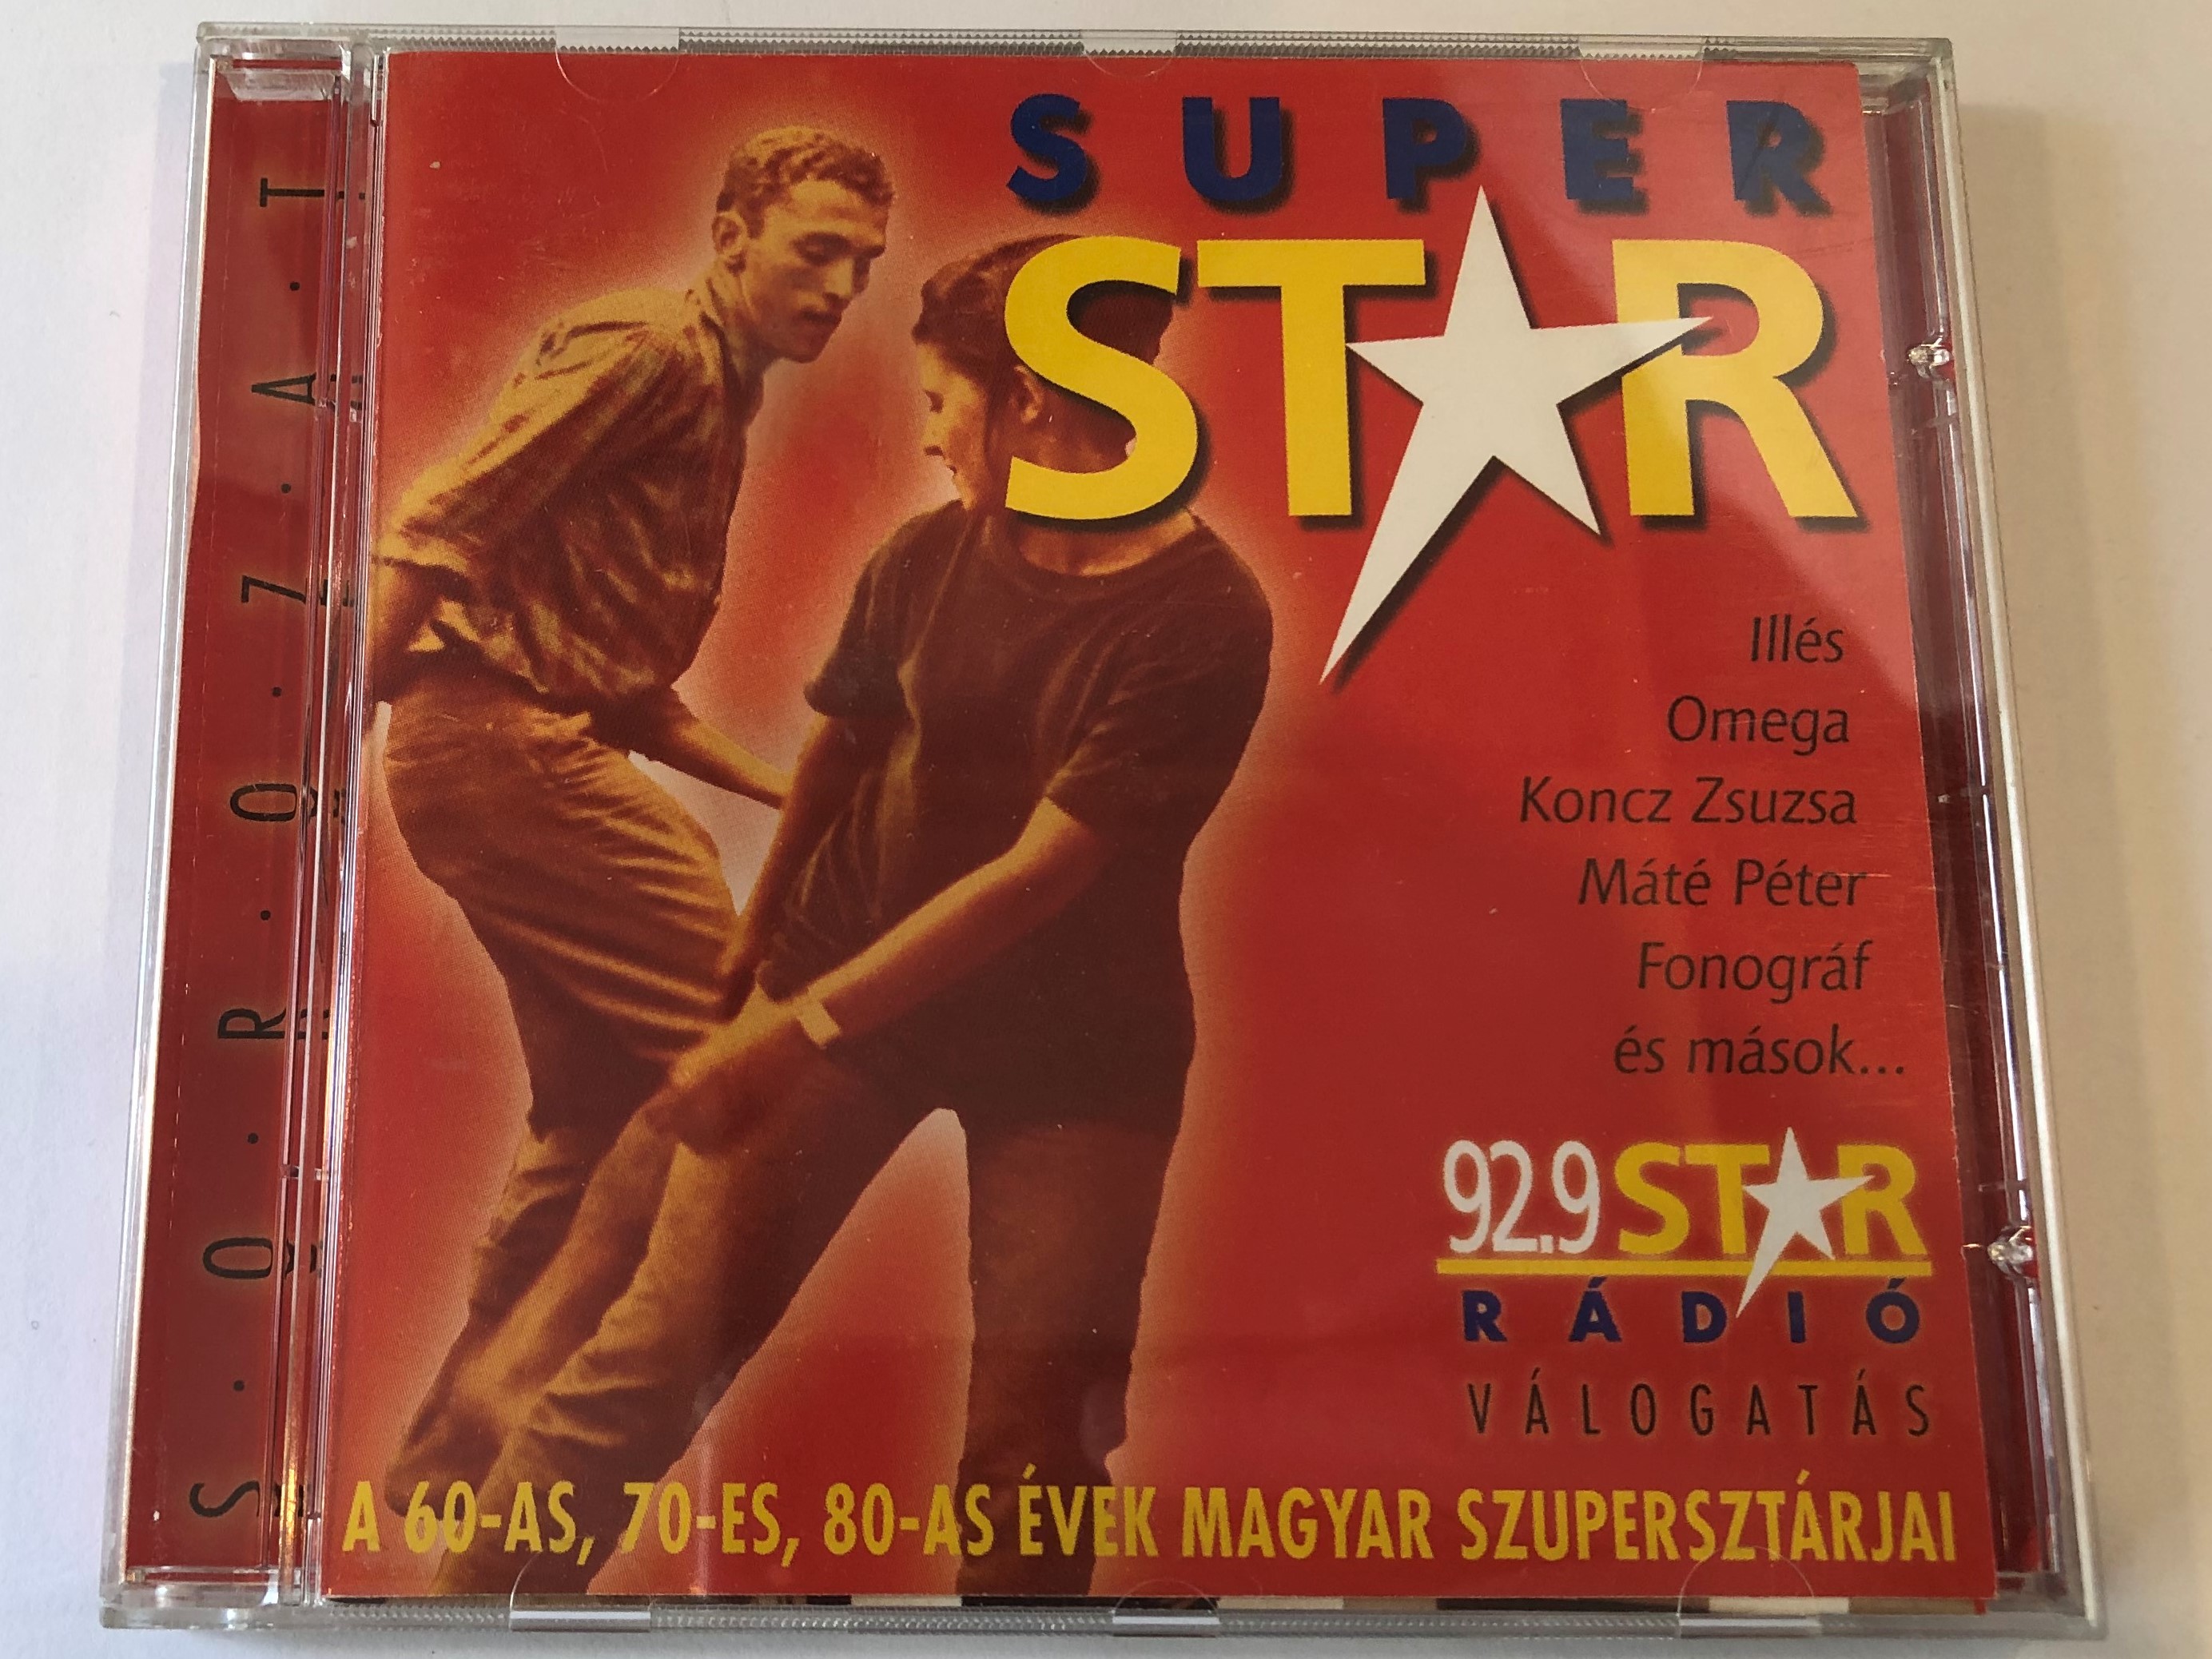 super-star-illes-omega-koncz-zsuzsa-mate-peter-fonograf-es-masok...-92.9-star-radio-valogatas-a-60-as-70-es-80-as-evek-magyar-szupersztarja-gong-audio-cd-hcd-37909-1-.jpg